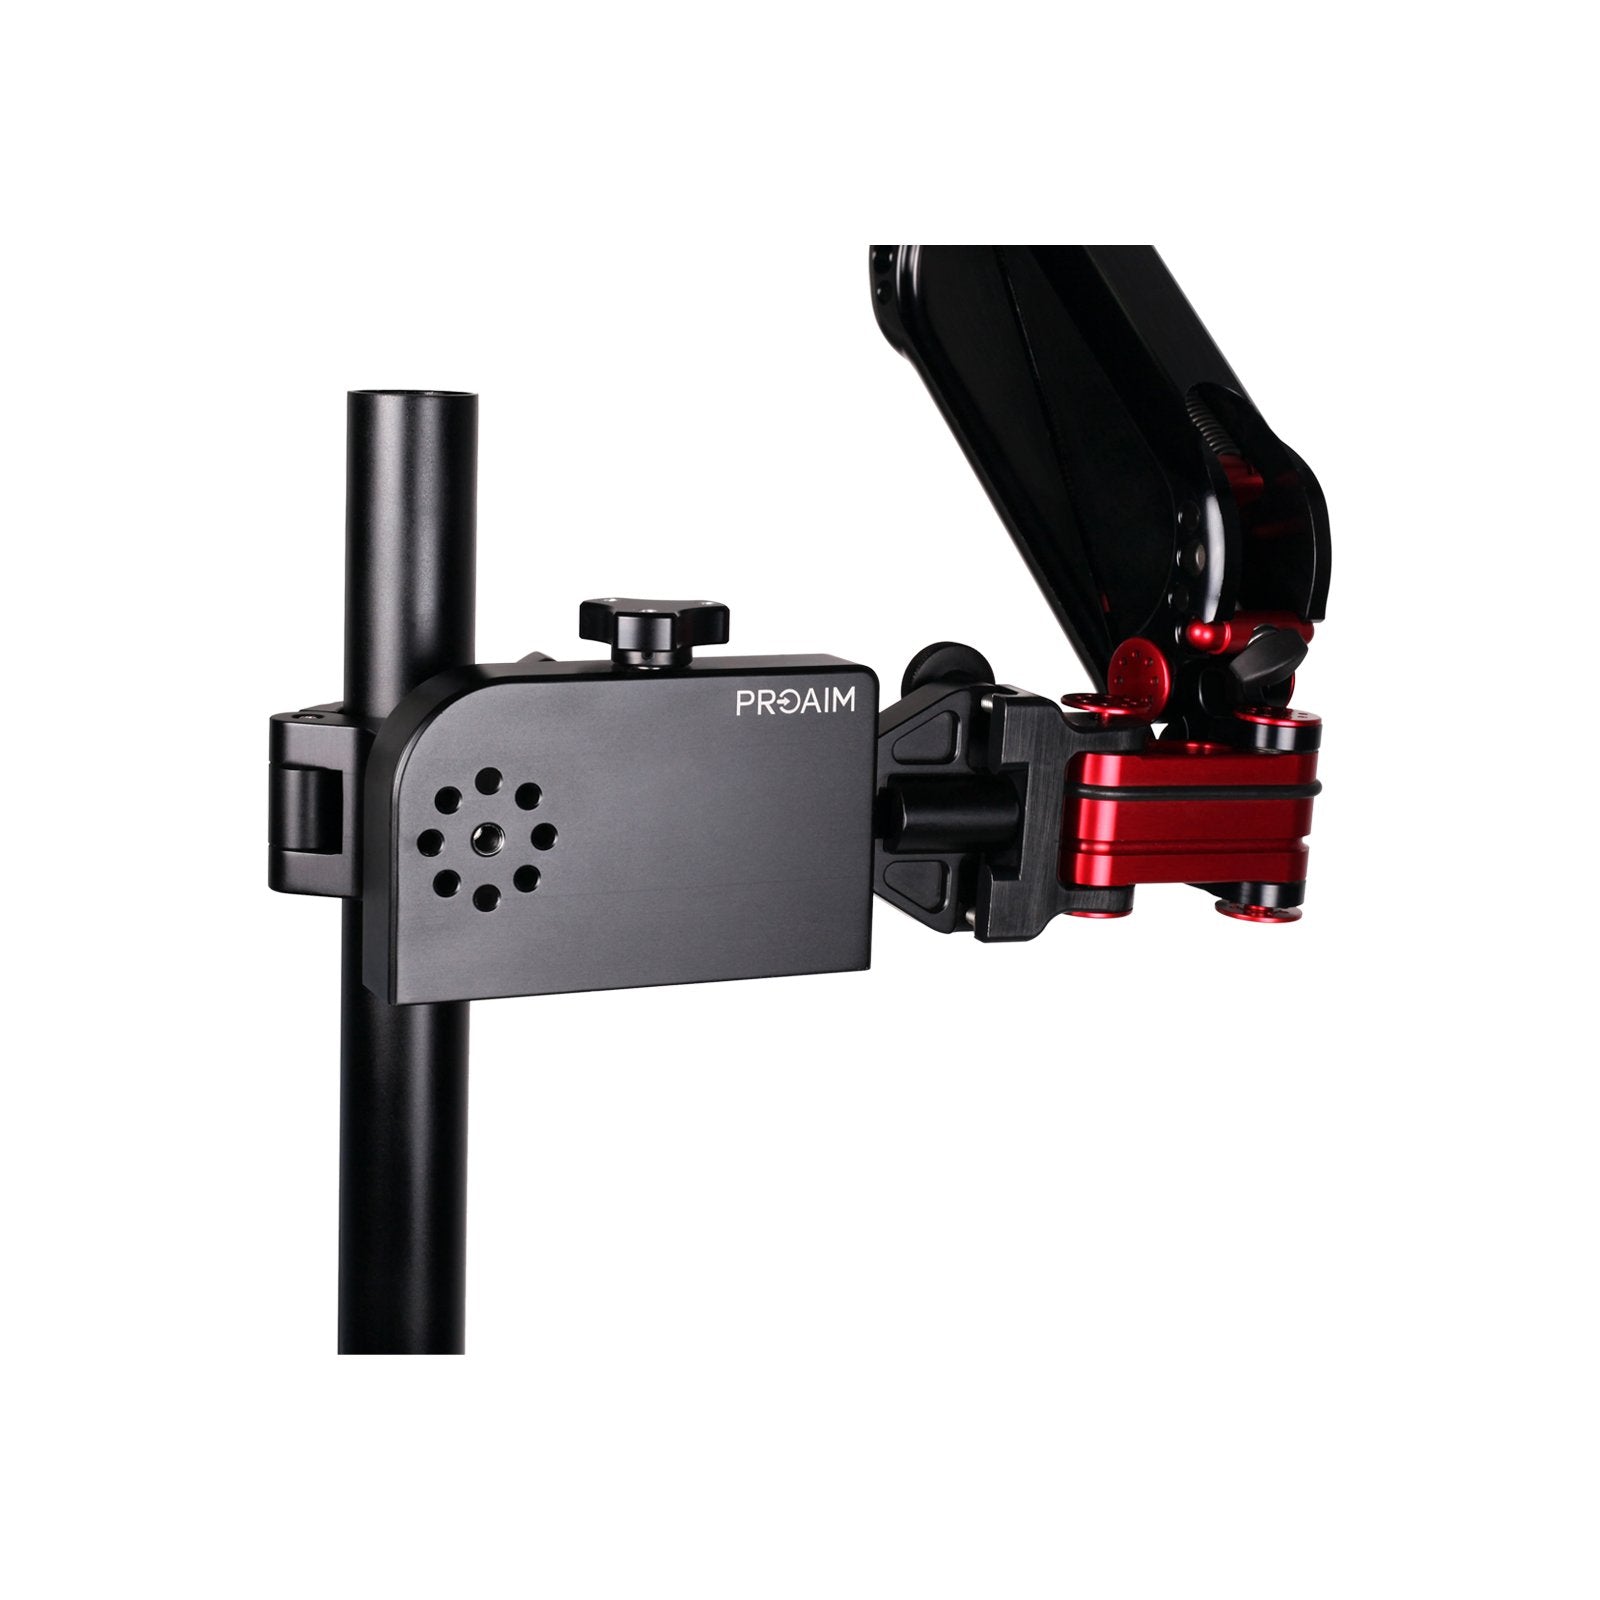 Proaim Hard Mount Kit for Camera Stabilizer Arm | For Speed Rail